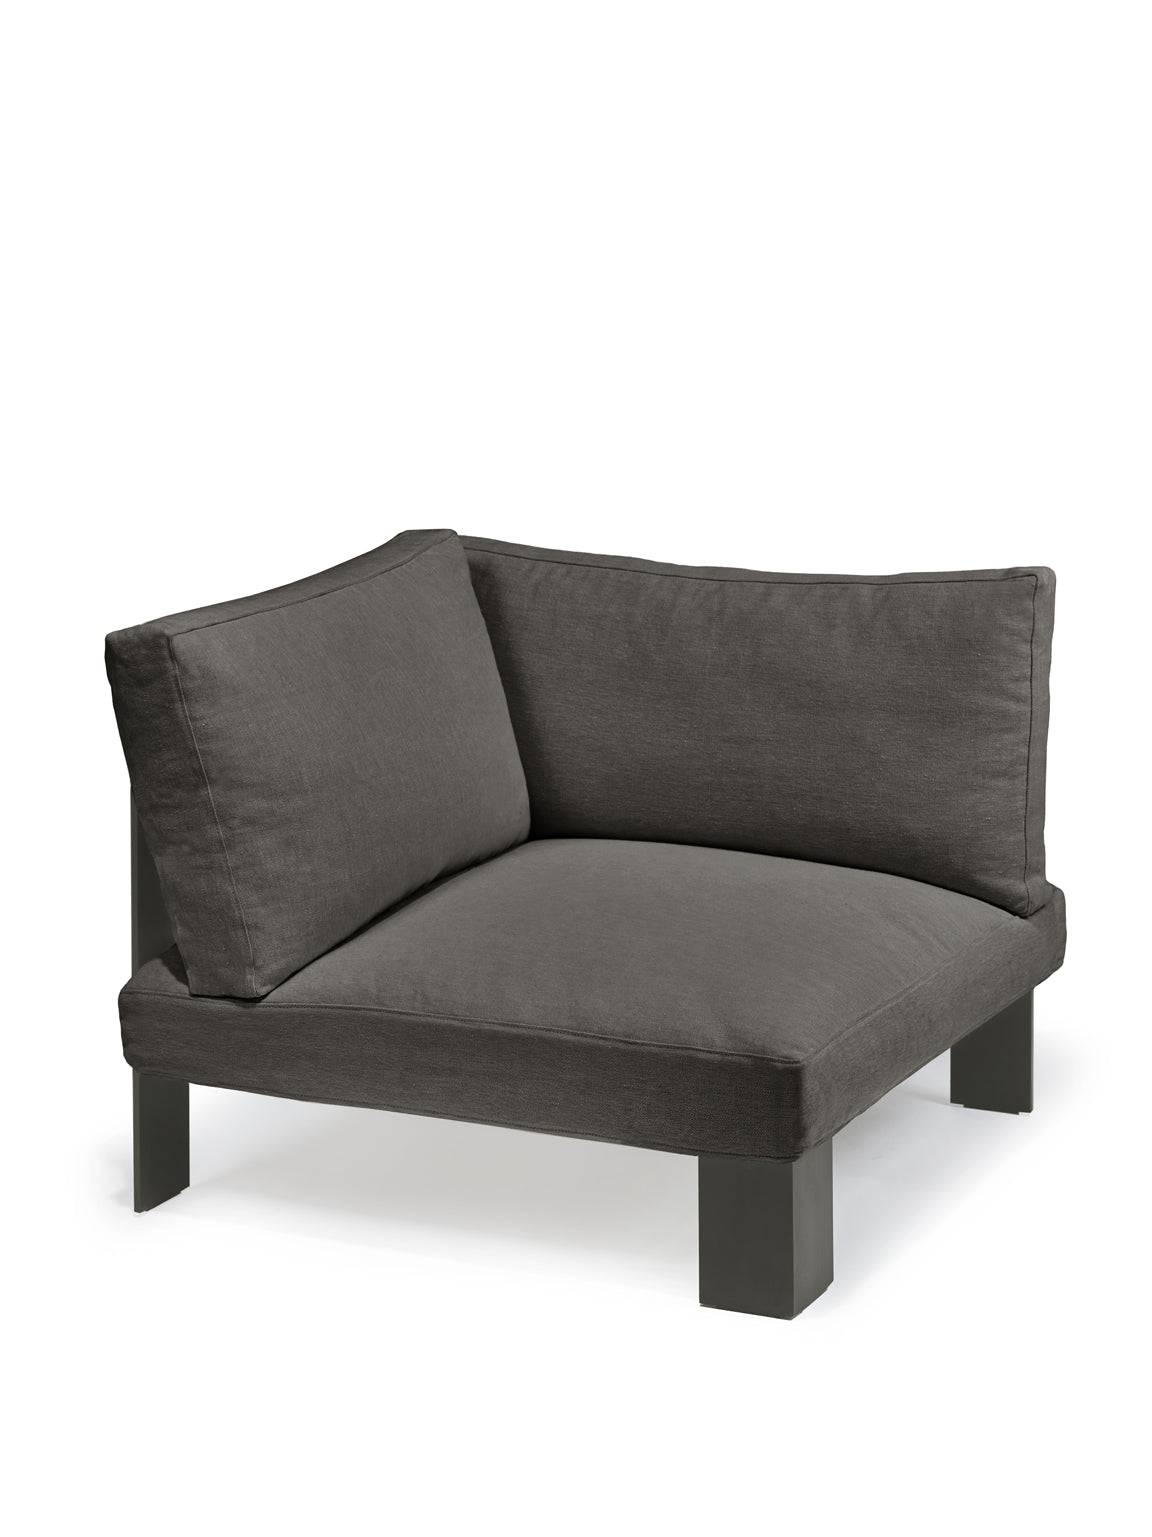 Mombaers Sofa - Charcoal - THAT COOL LIVING